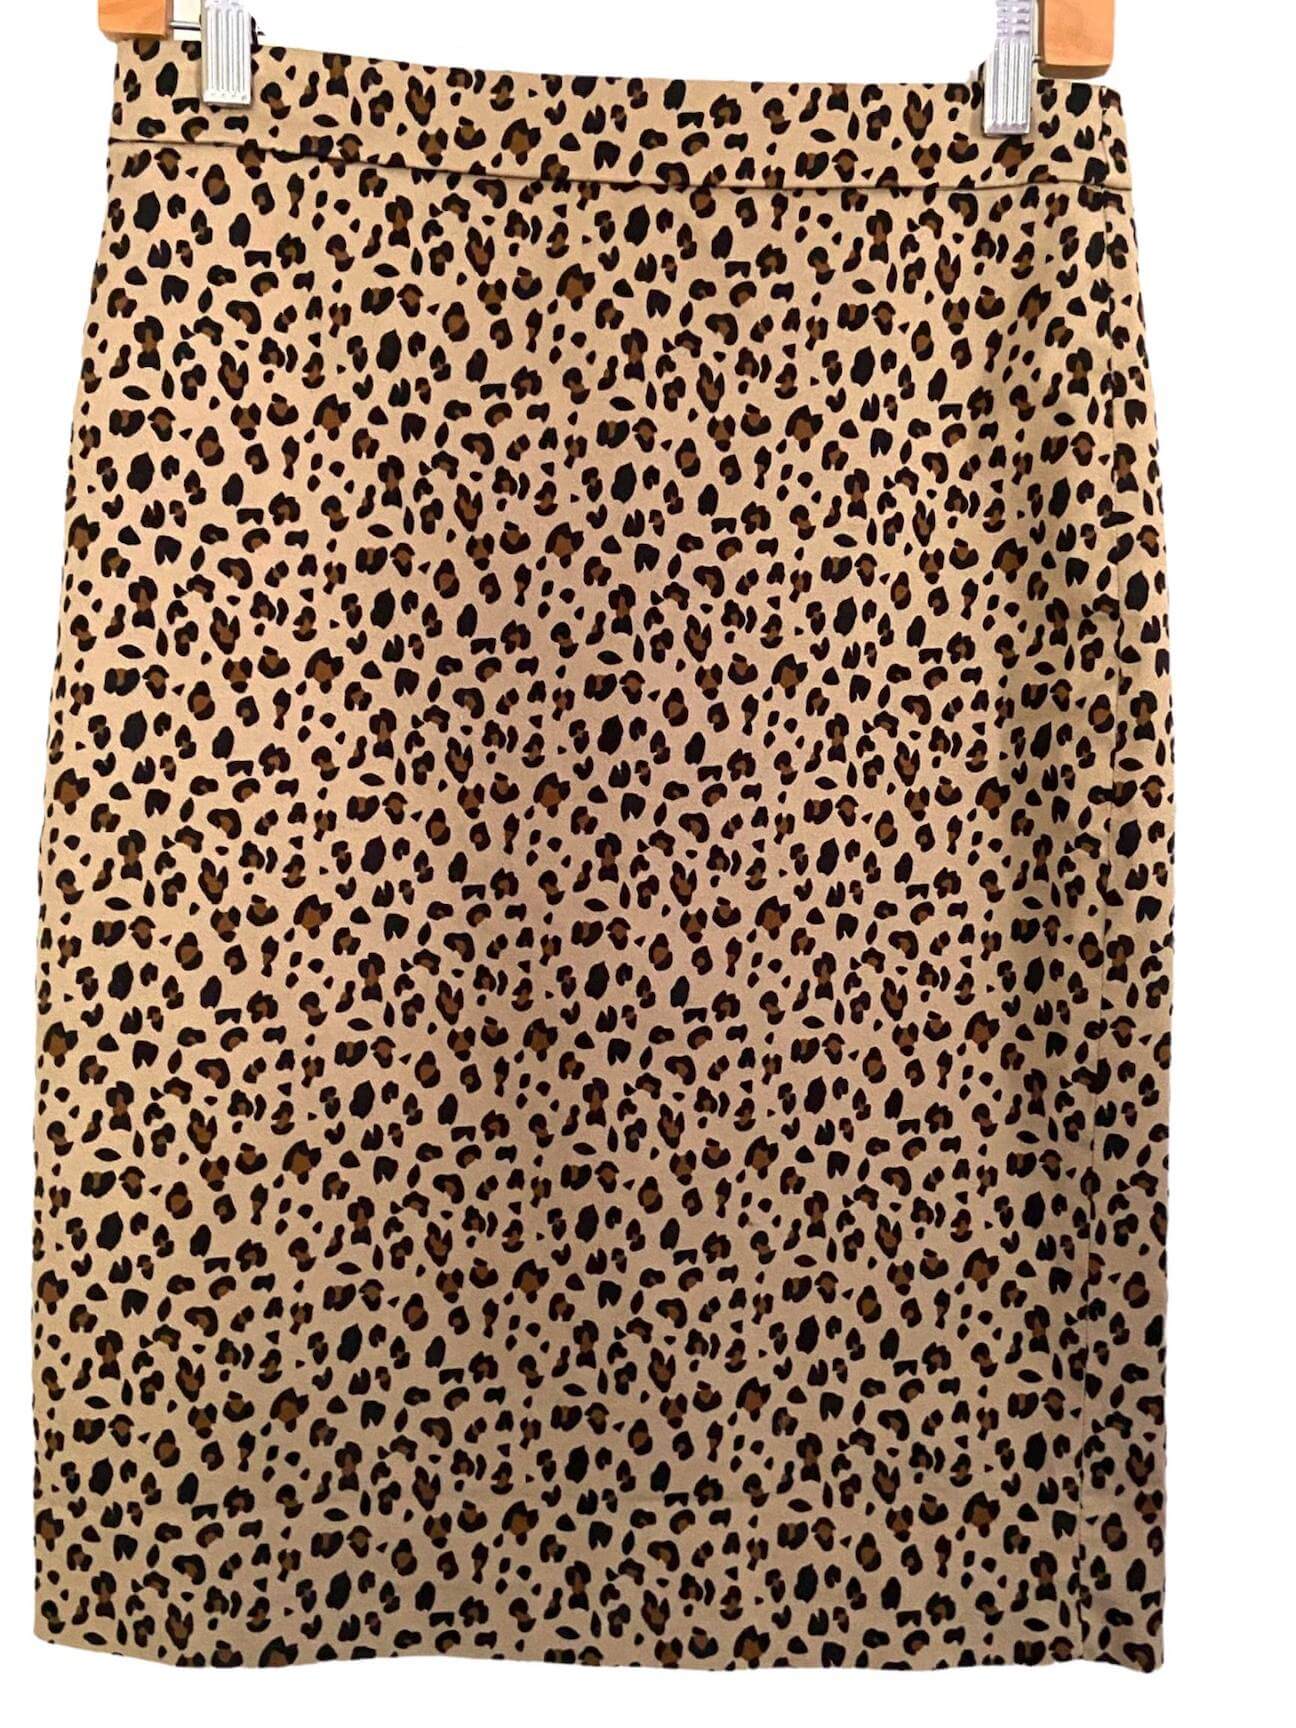 Dark Autumn J.CREW leopard pencil skirt 